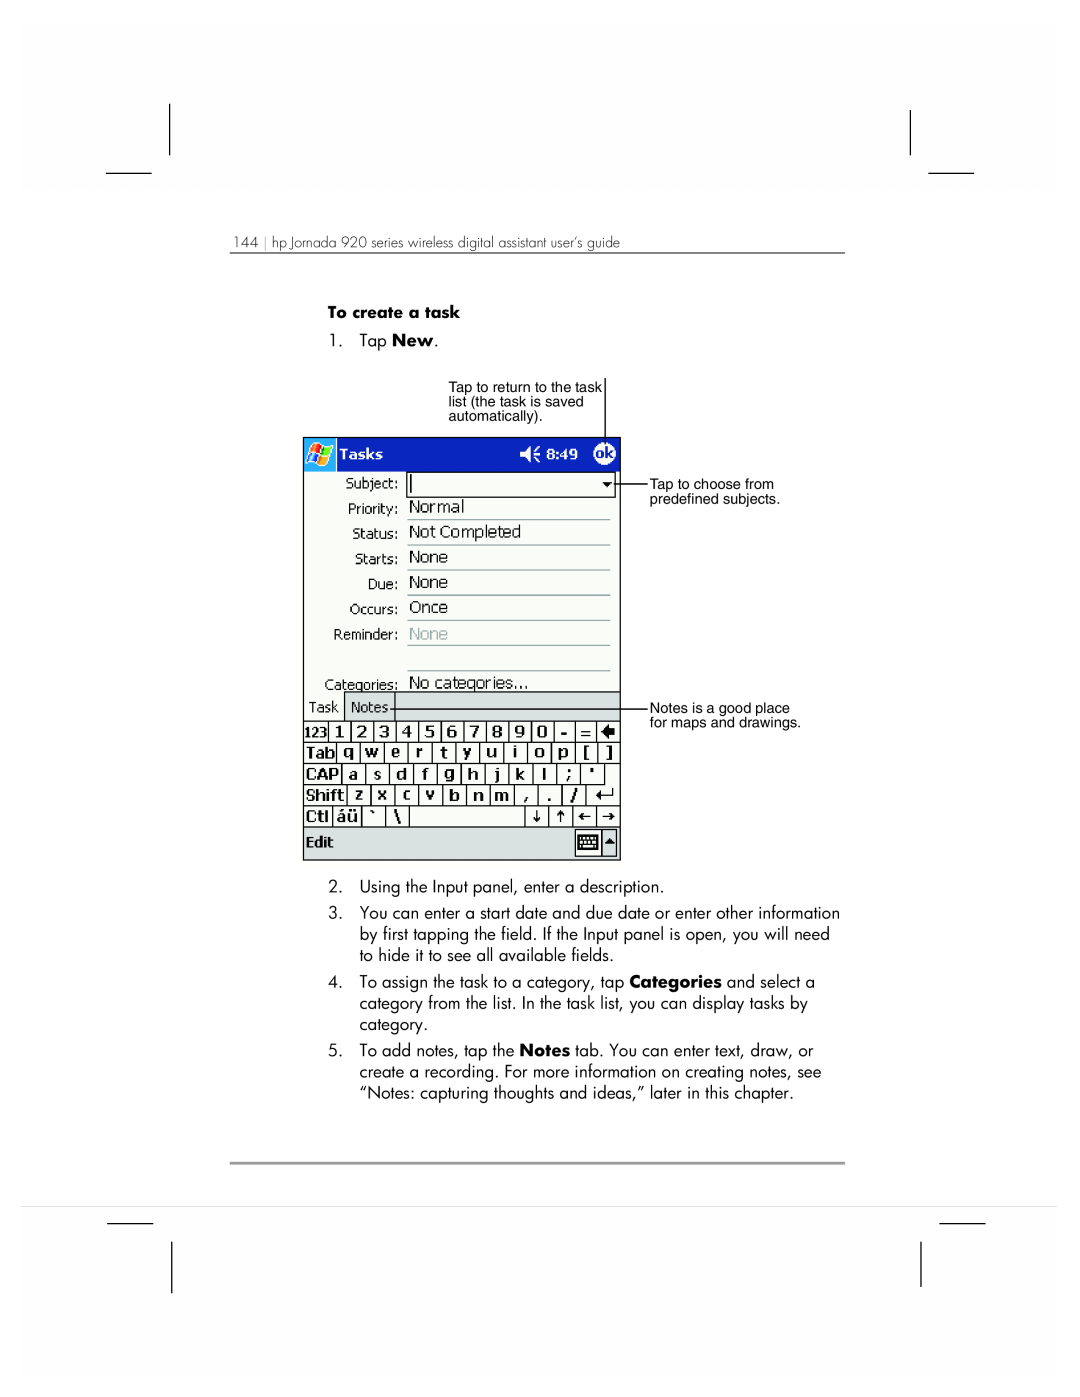 HP manual To create a task, hp Jornada 920 series wireless digital assistant user’s guide 